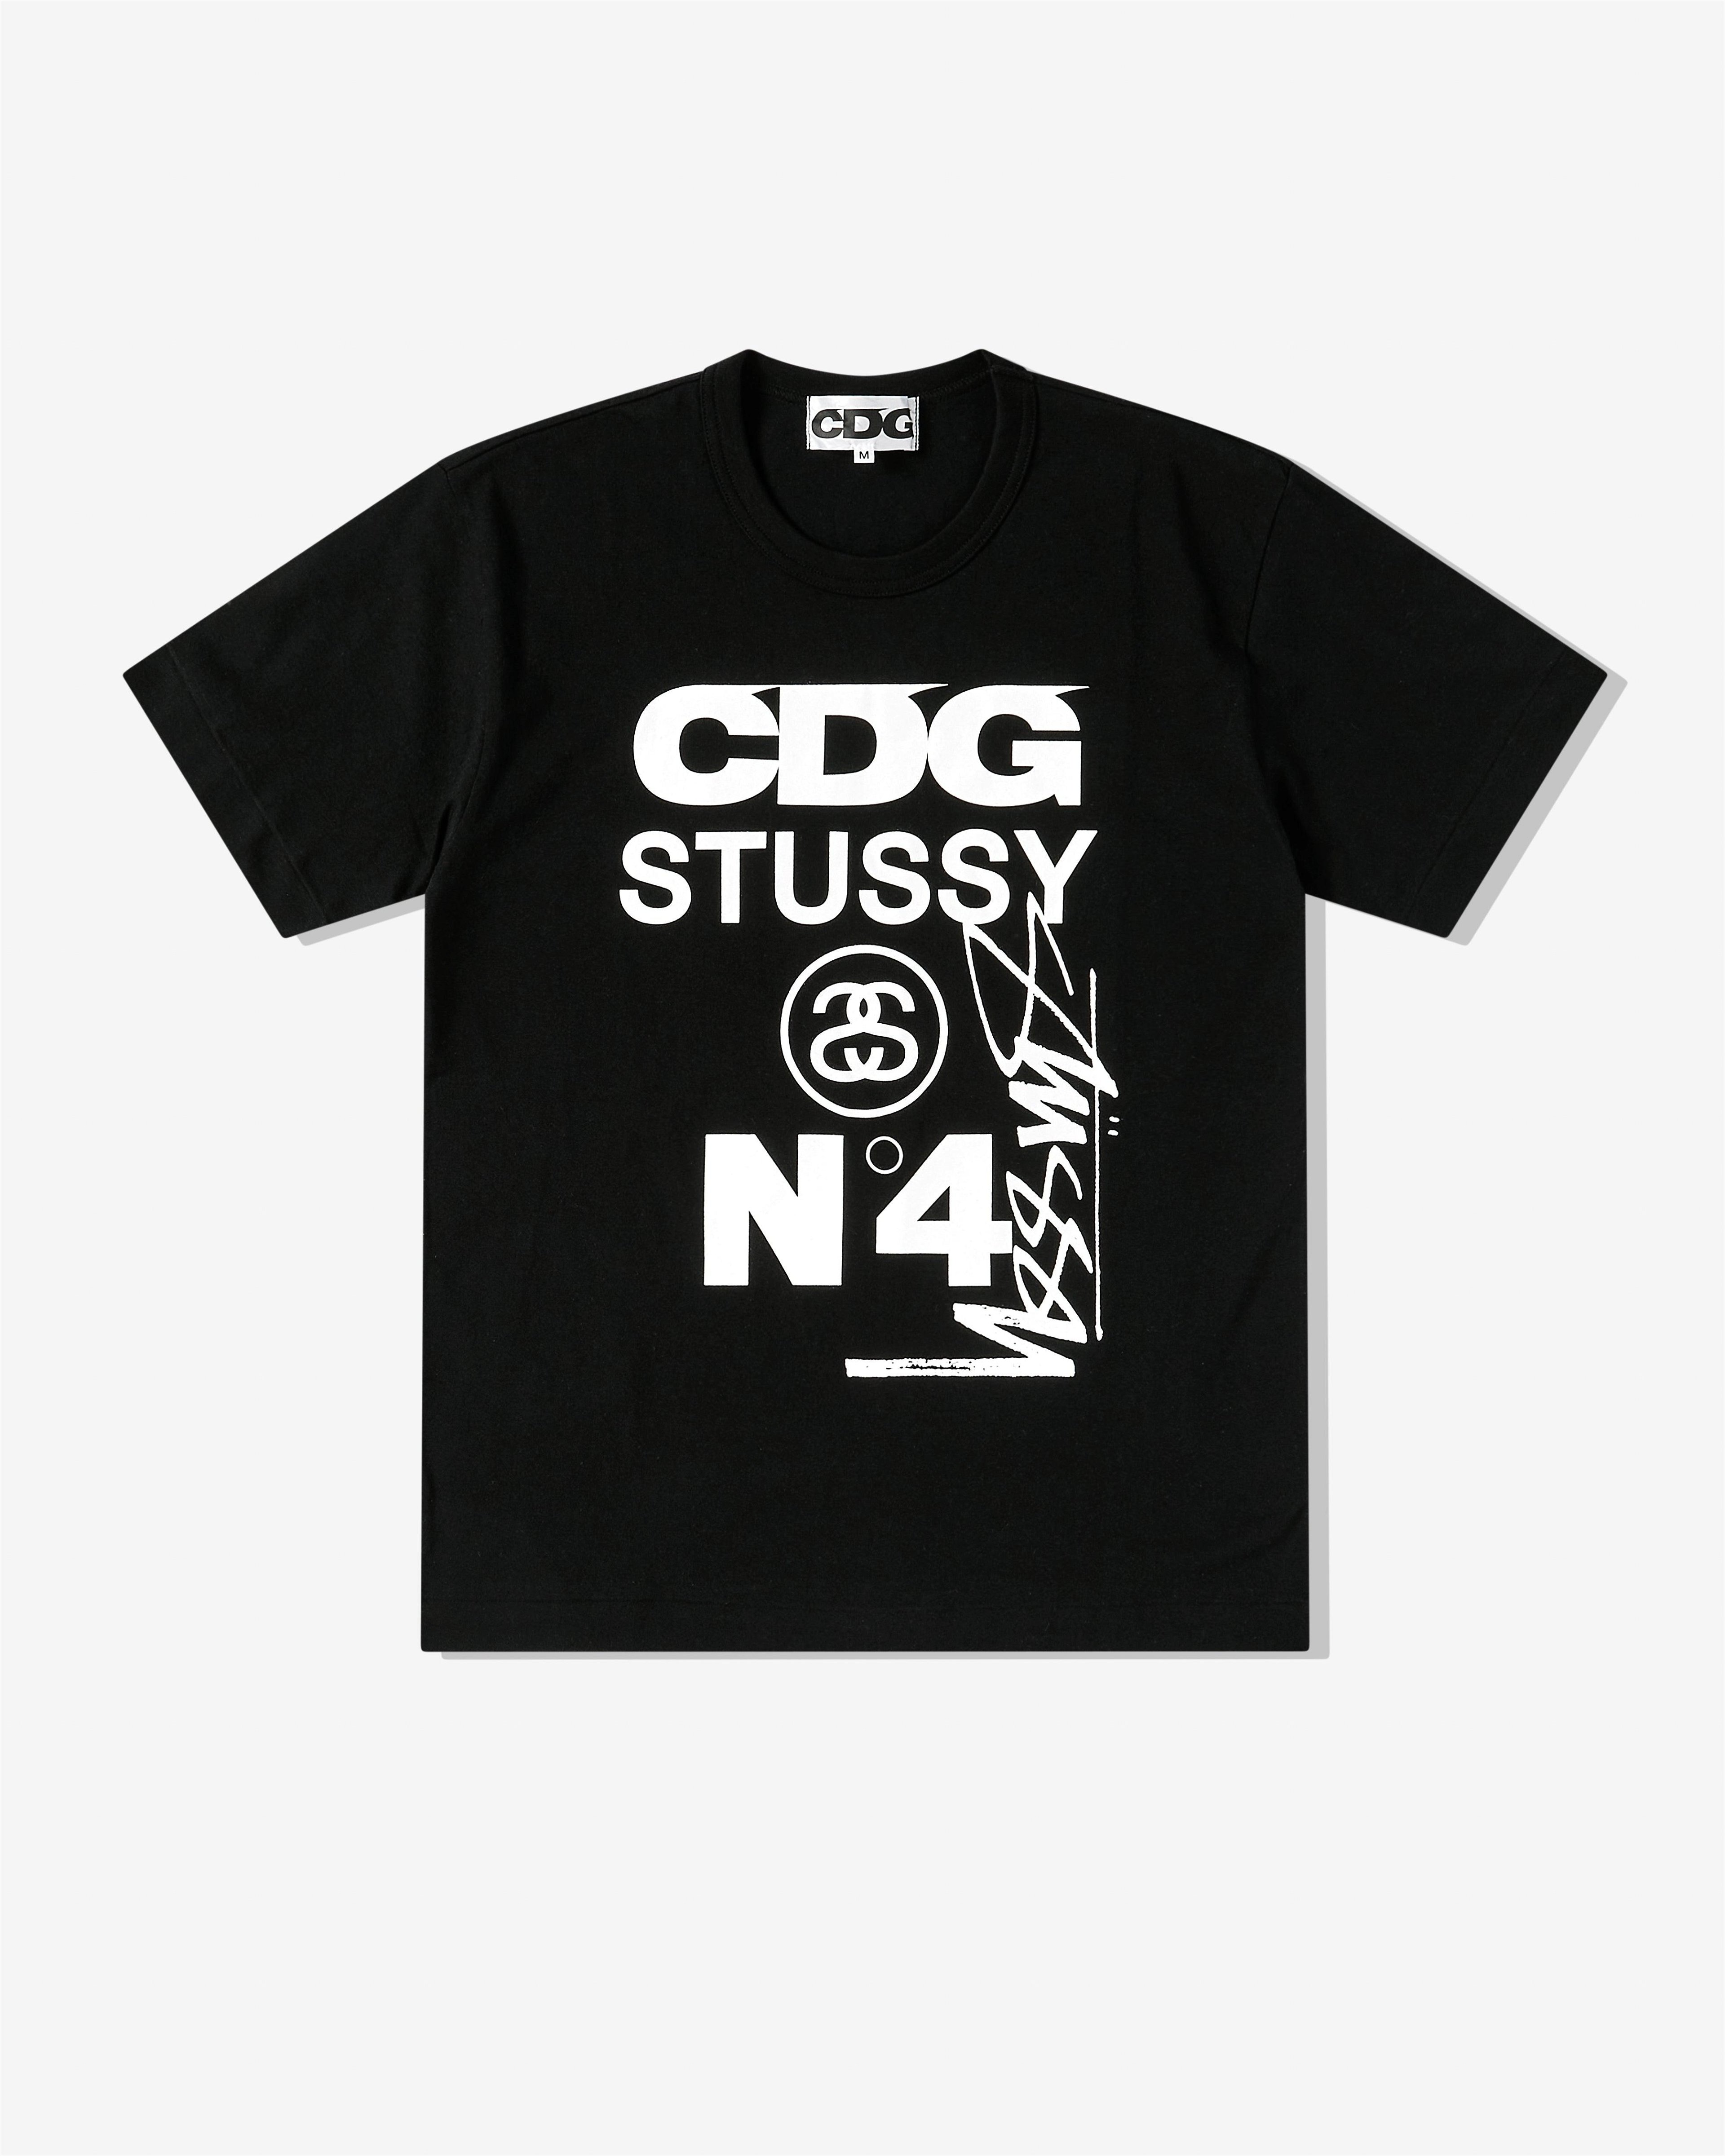 CDG - Stüssy T-Shirt - (Black) by COMME DES GARCONS